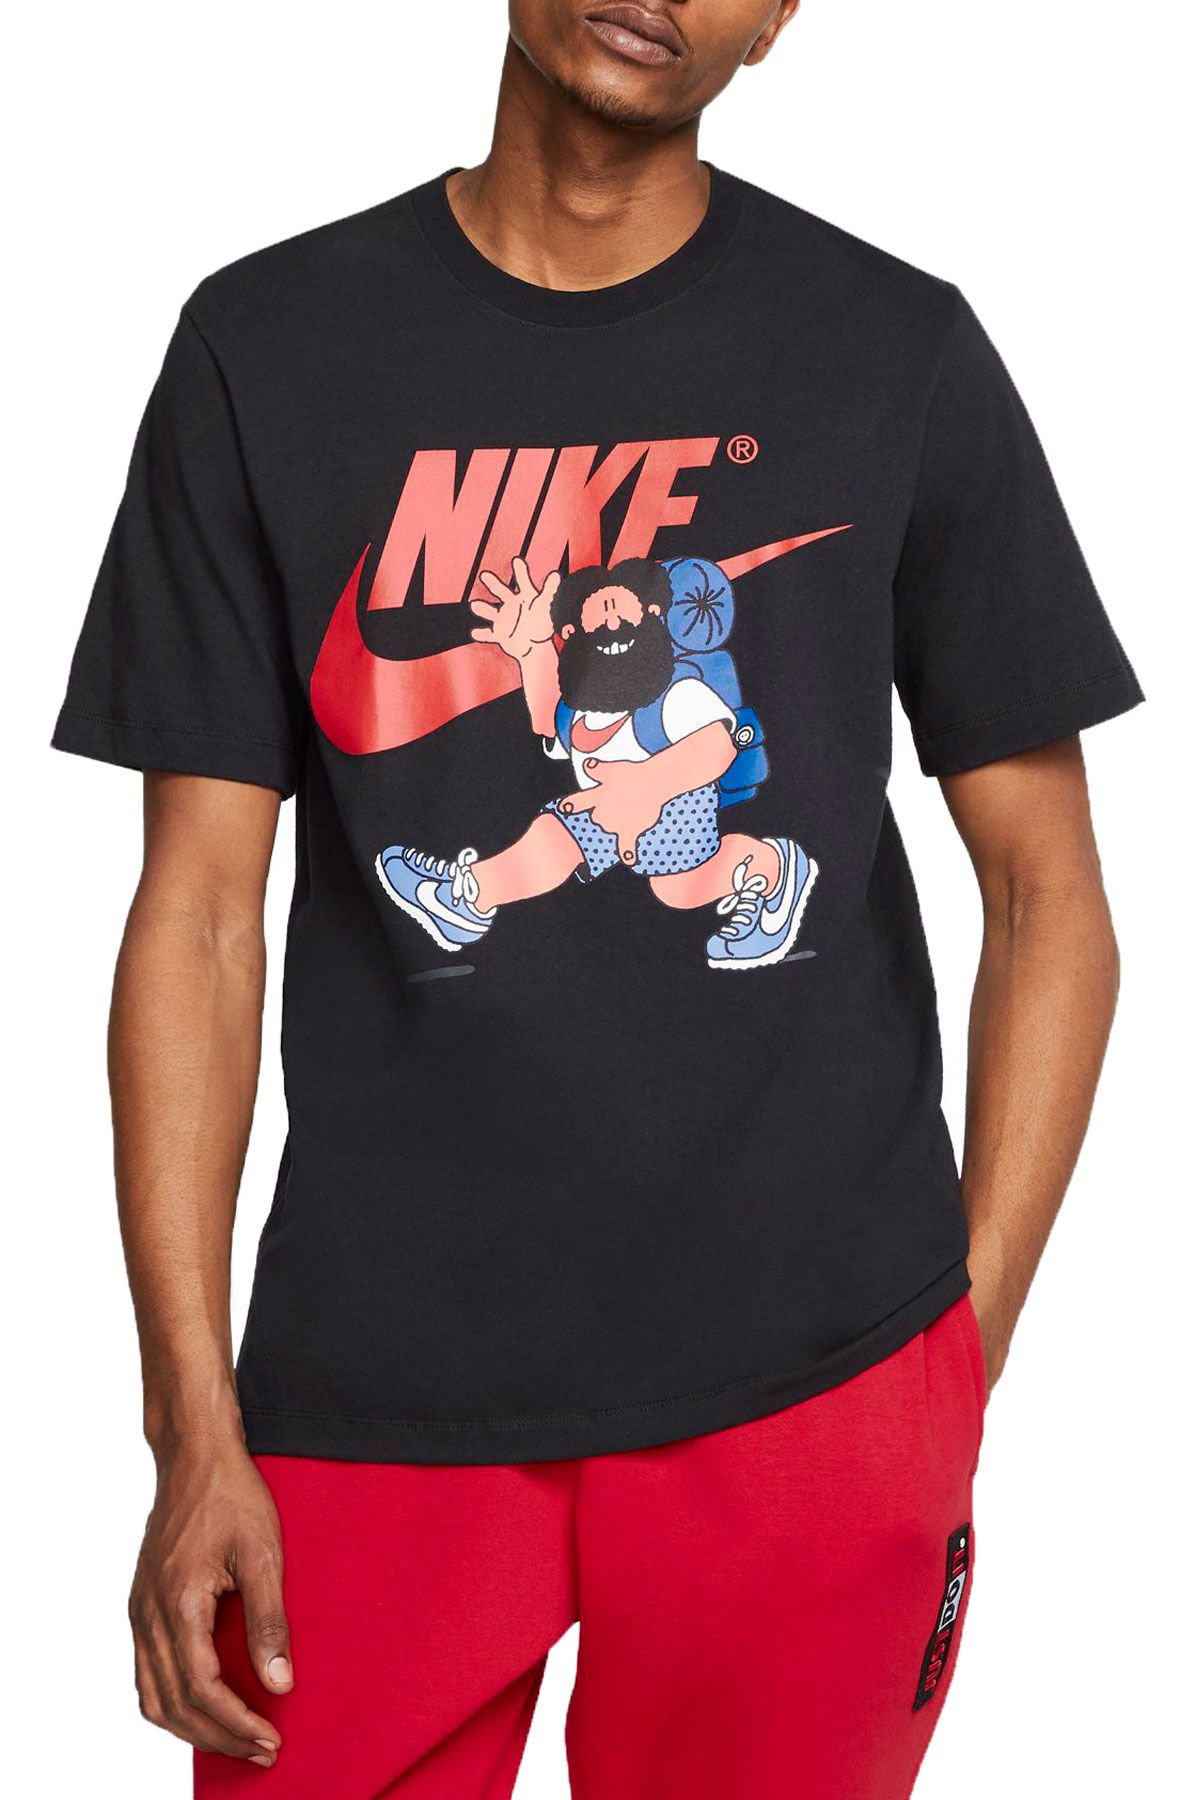 Nike Sportswear Hike Nike T-Shirt Black